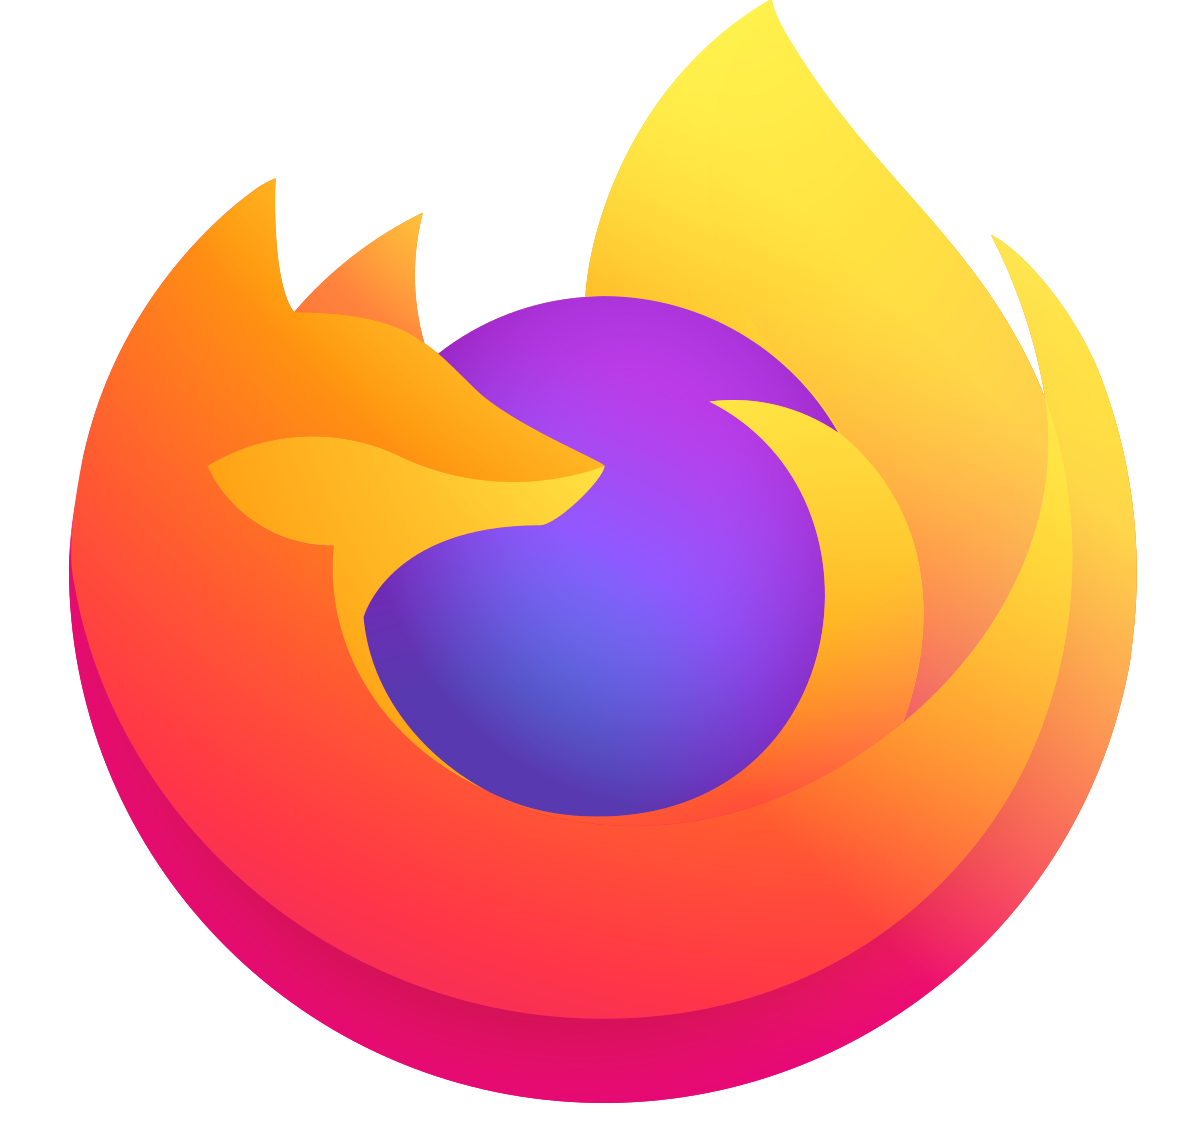 Браузер Мозила Фаерфокс / Mozilla Firefox 121.0 Последняя версия для Windows